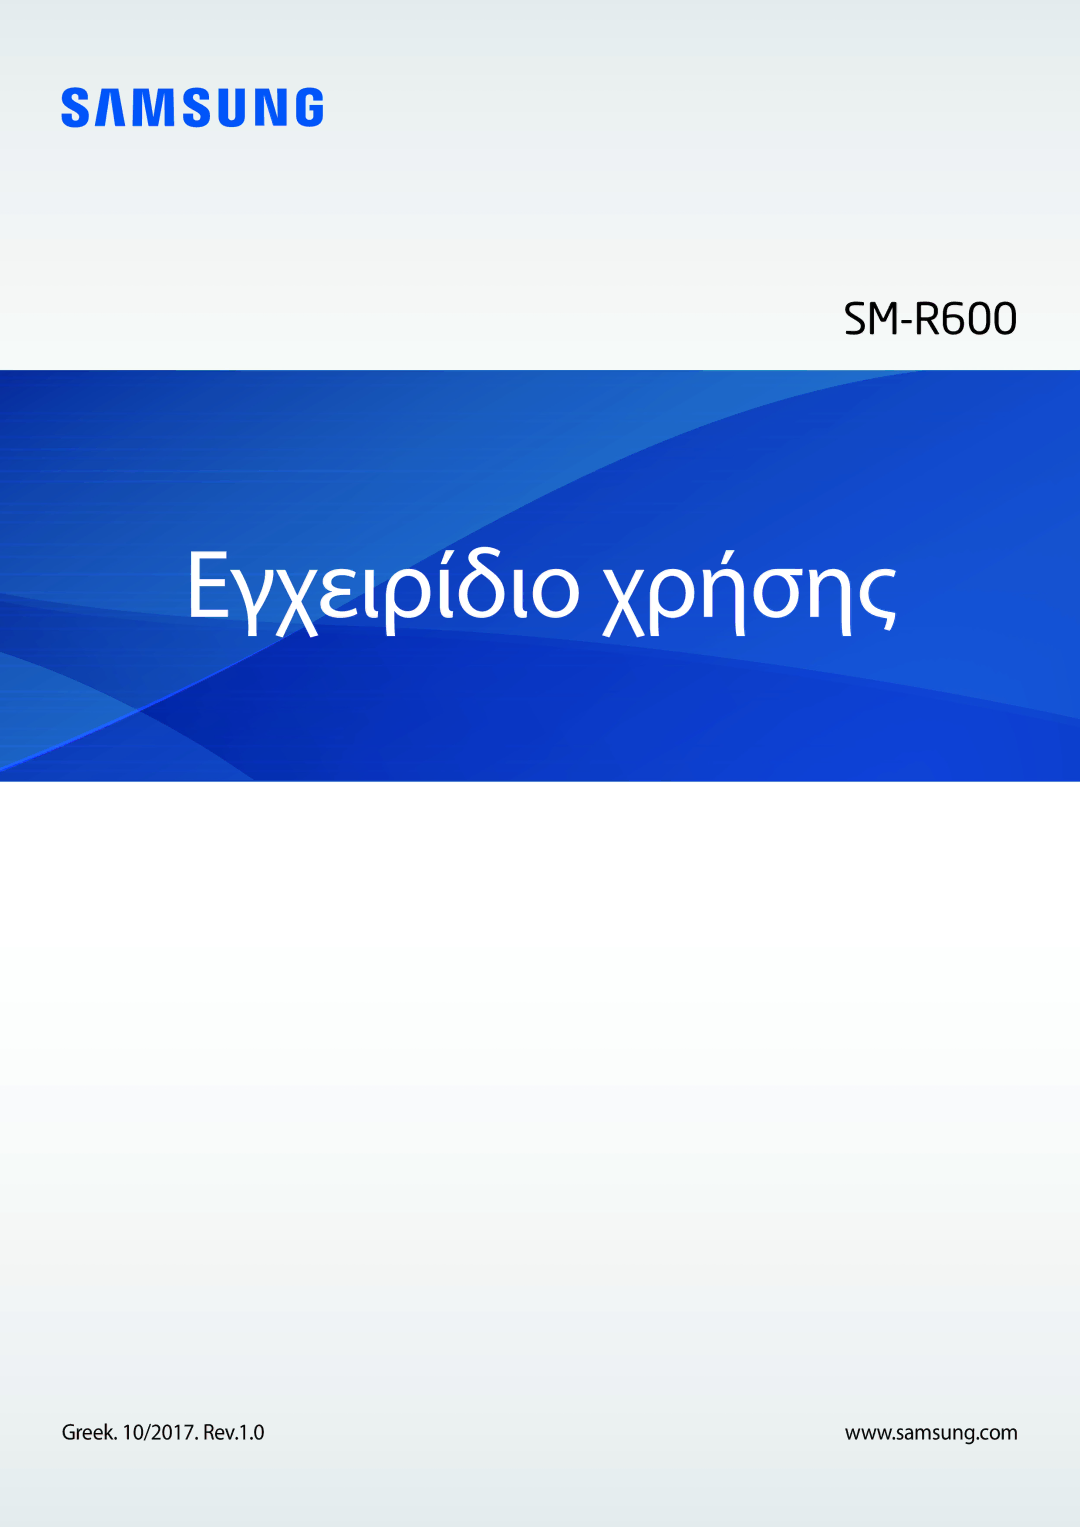 Samsung SM-R600NZBAEUR, SM-R600NZKAEUR manual Εγχειρίδιο χρήσης, Greek /2017. Rev.1.0 